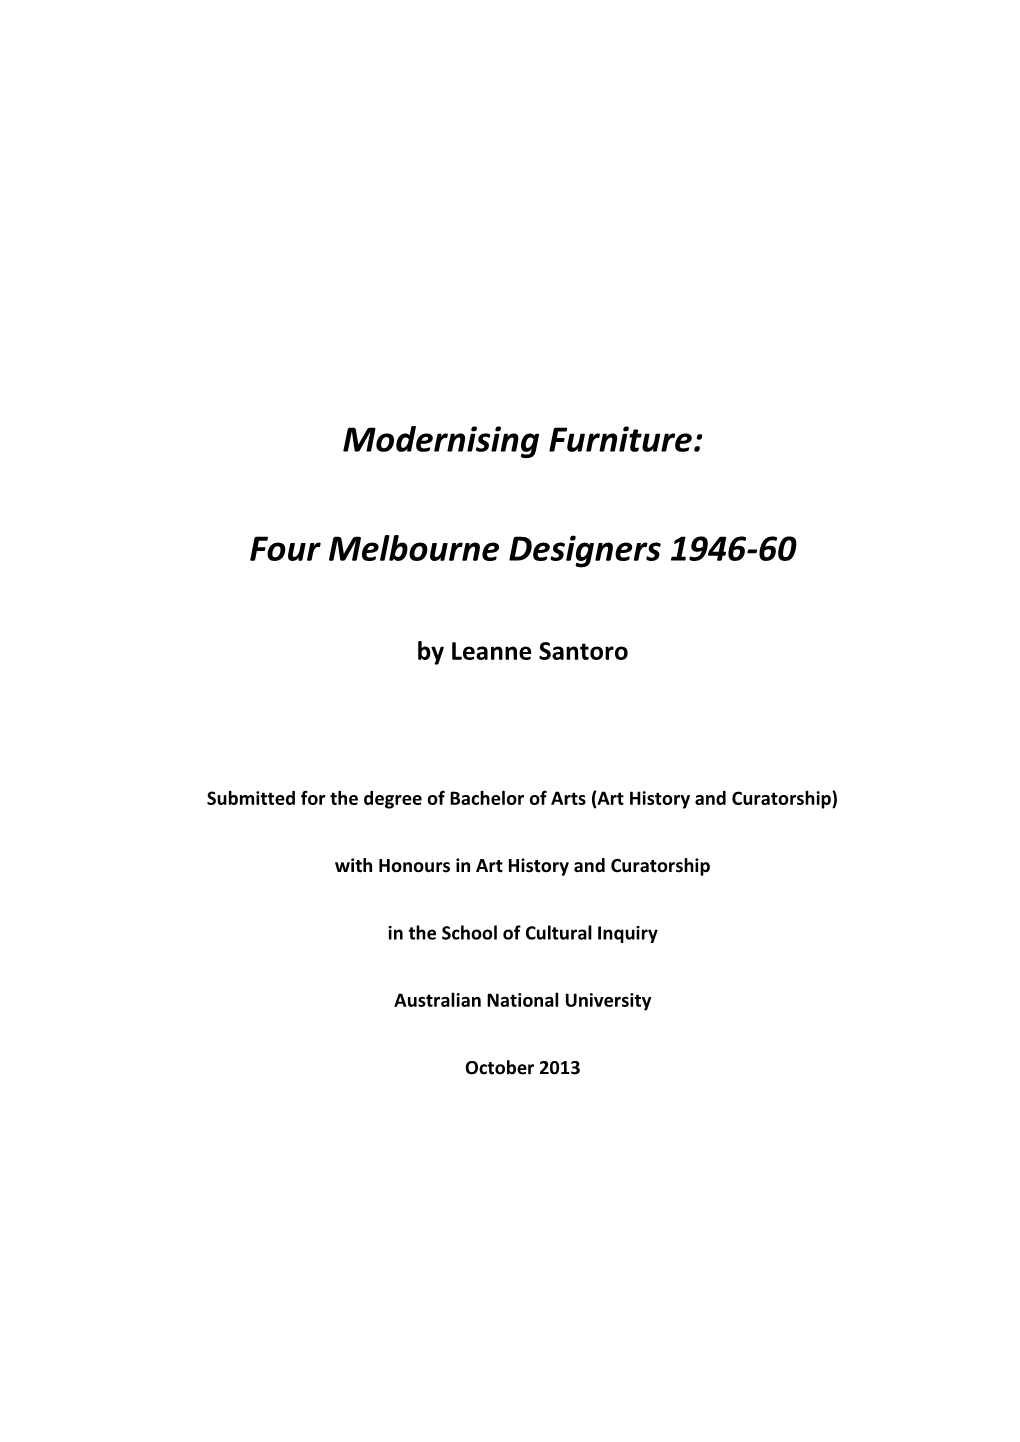 Modernising Furniture: Four Melbourne Designers 1946-60